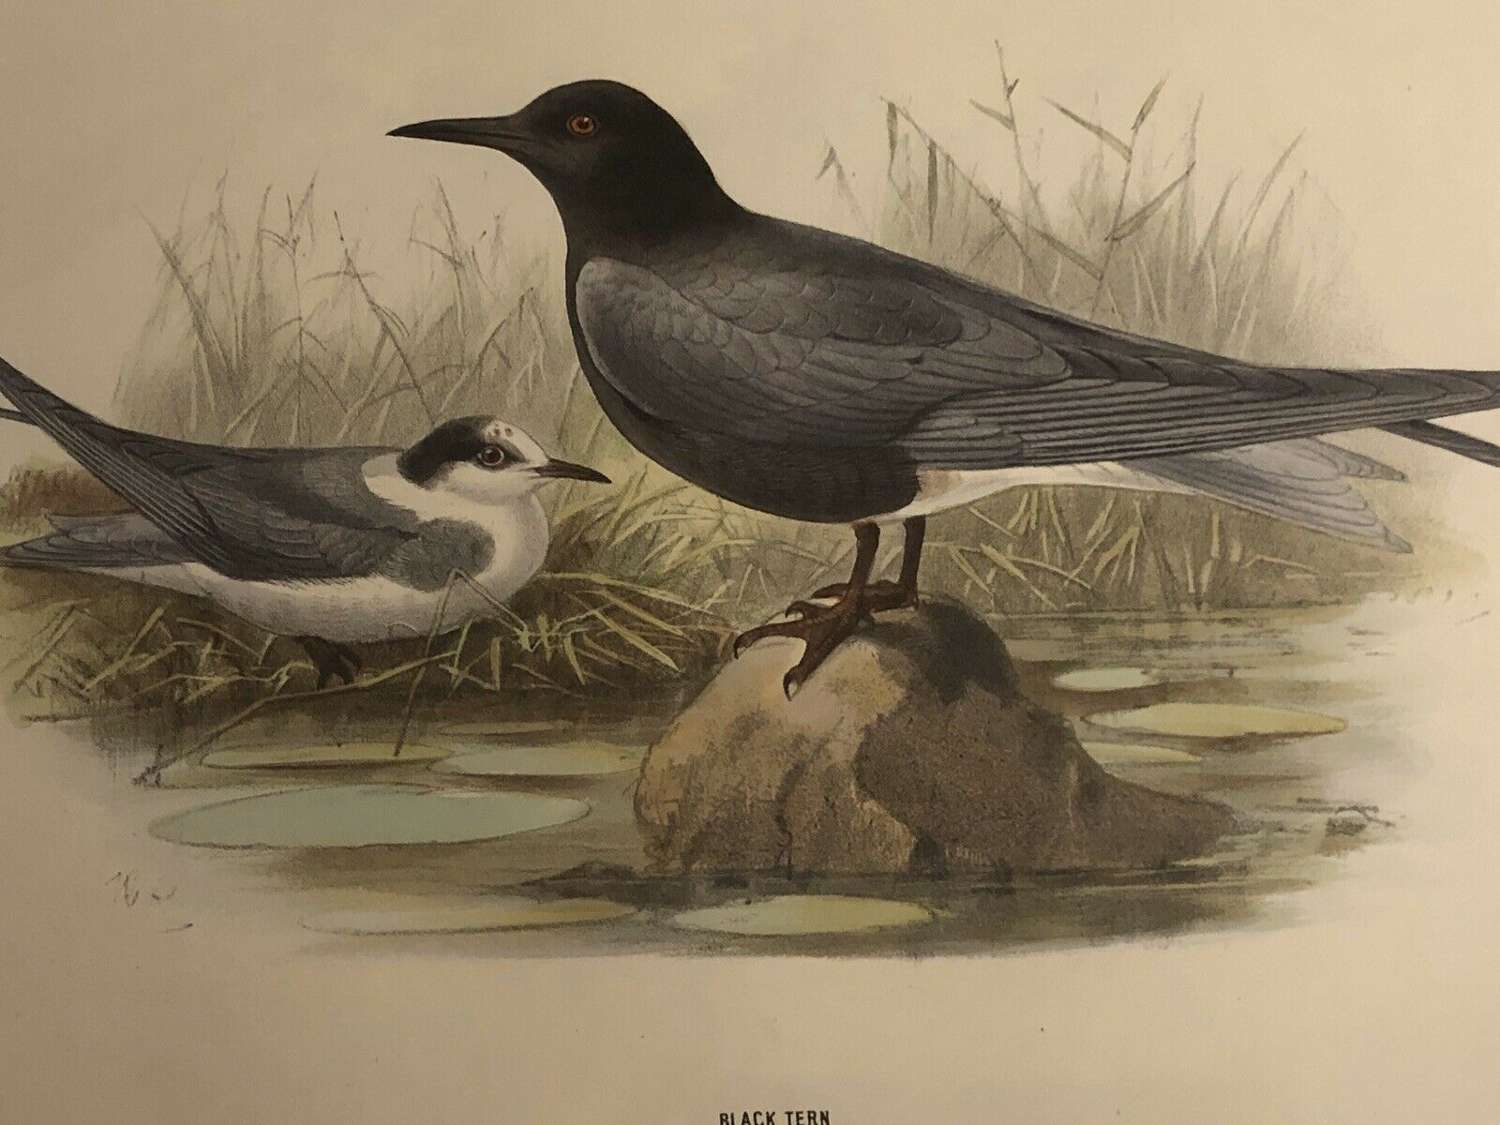 Black tern hand coloured lithograph